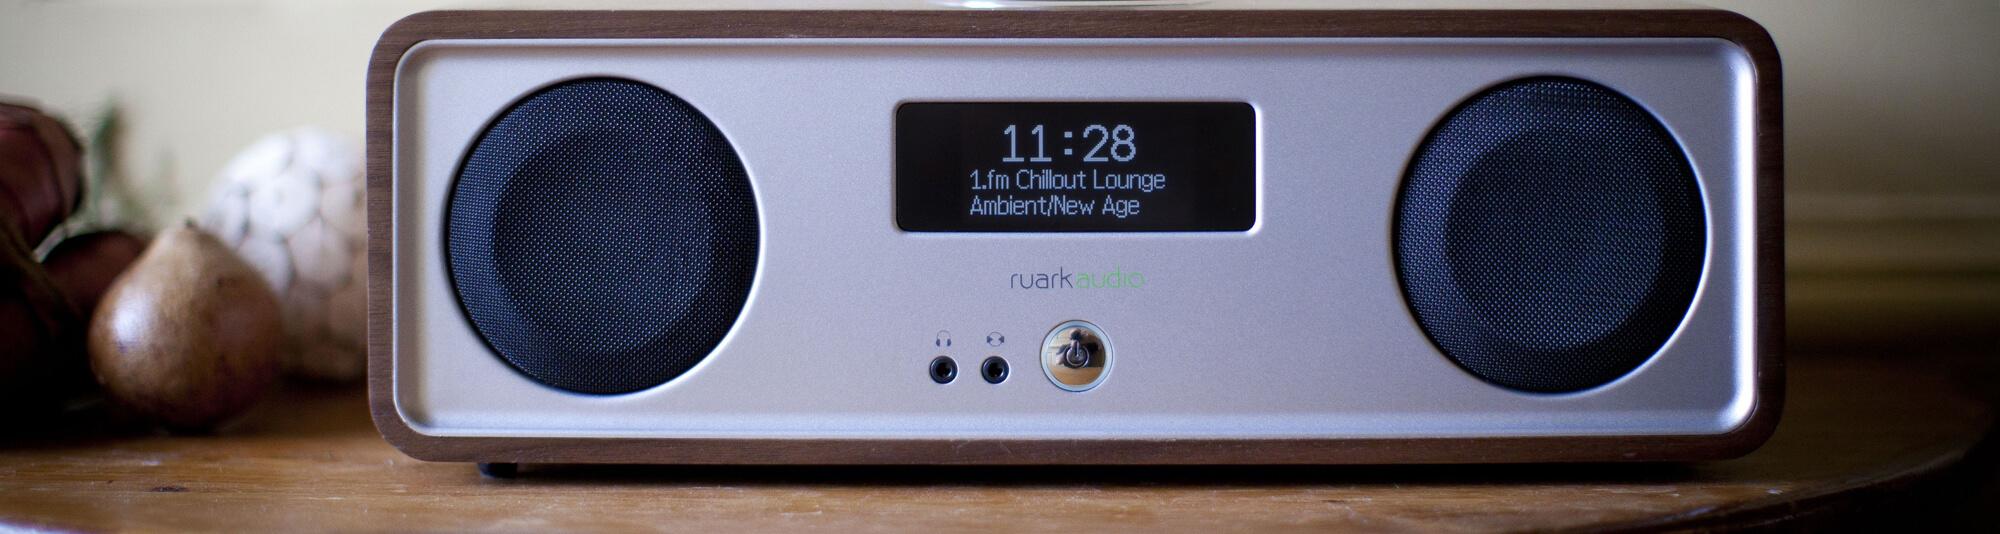 Ruark Radios | From £219 | Shop Now